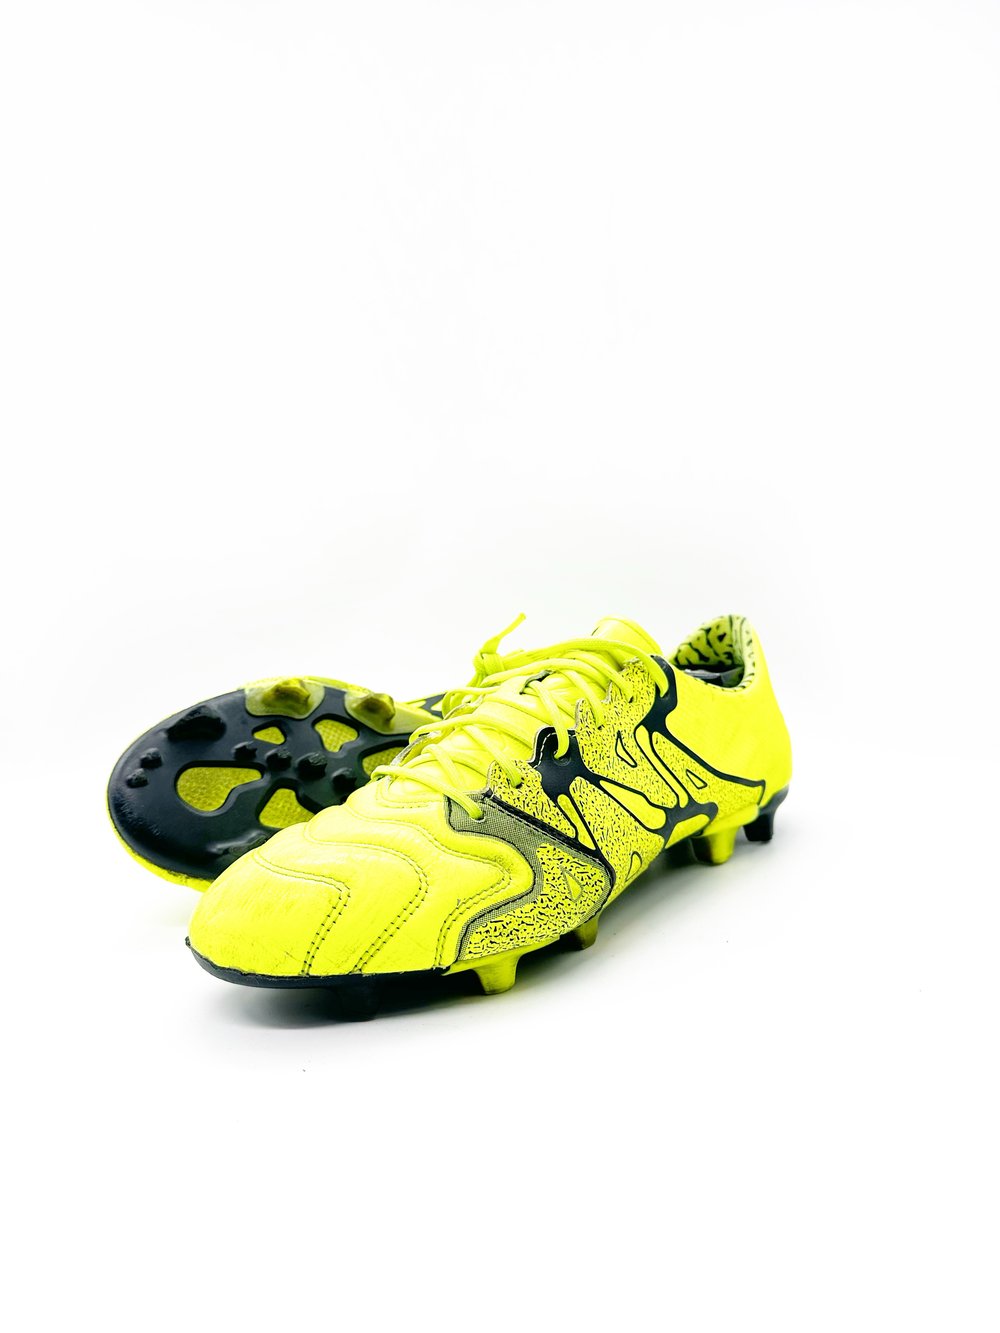 Image of Adidas 15.1 X FG Yellow Worn